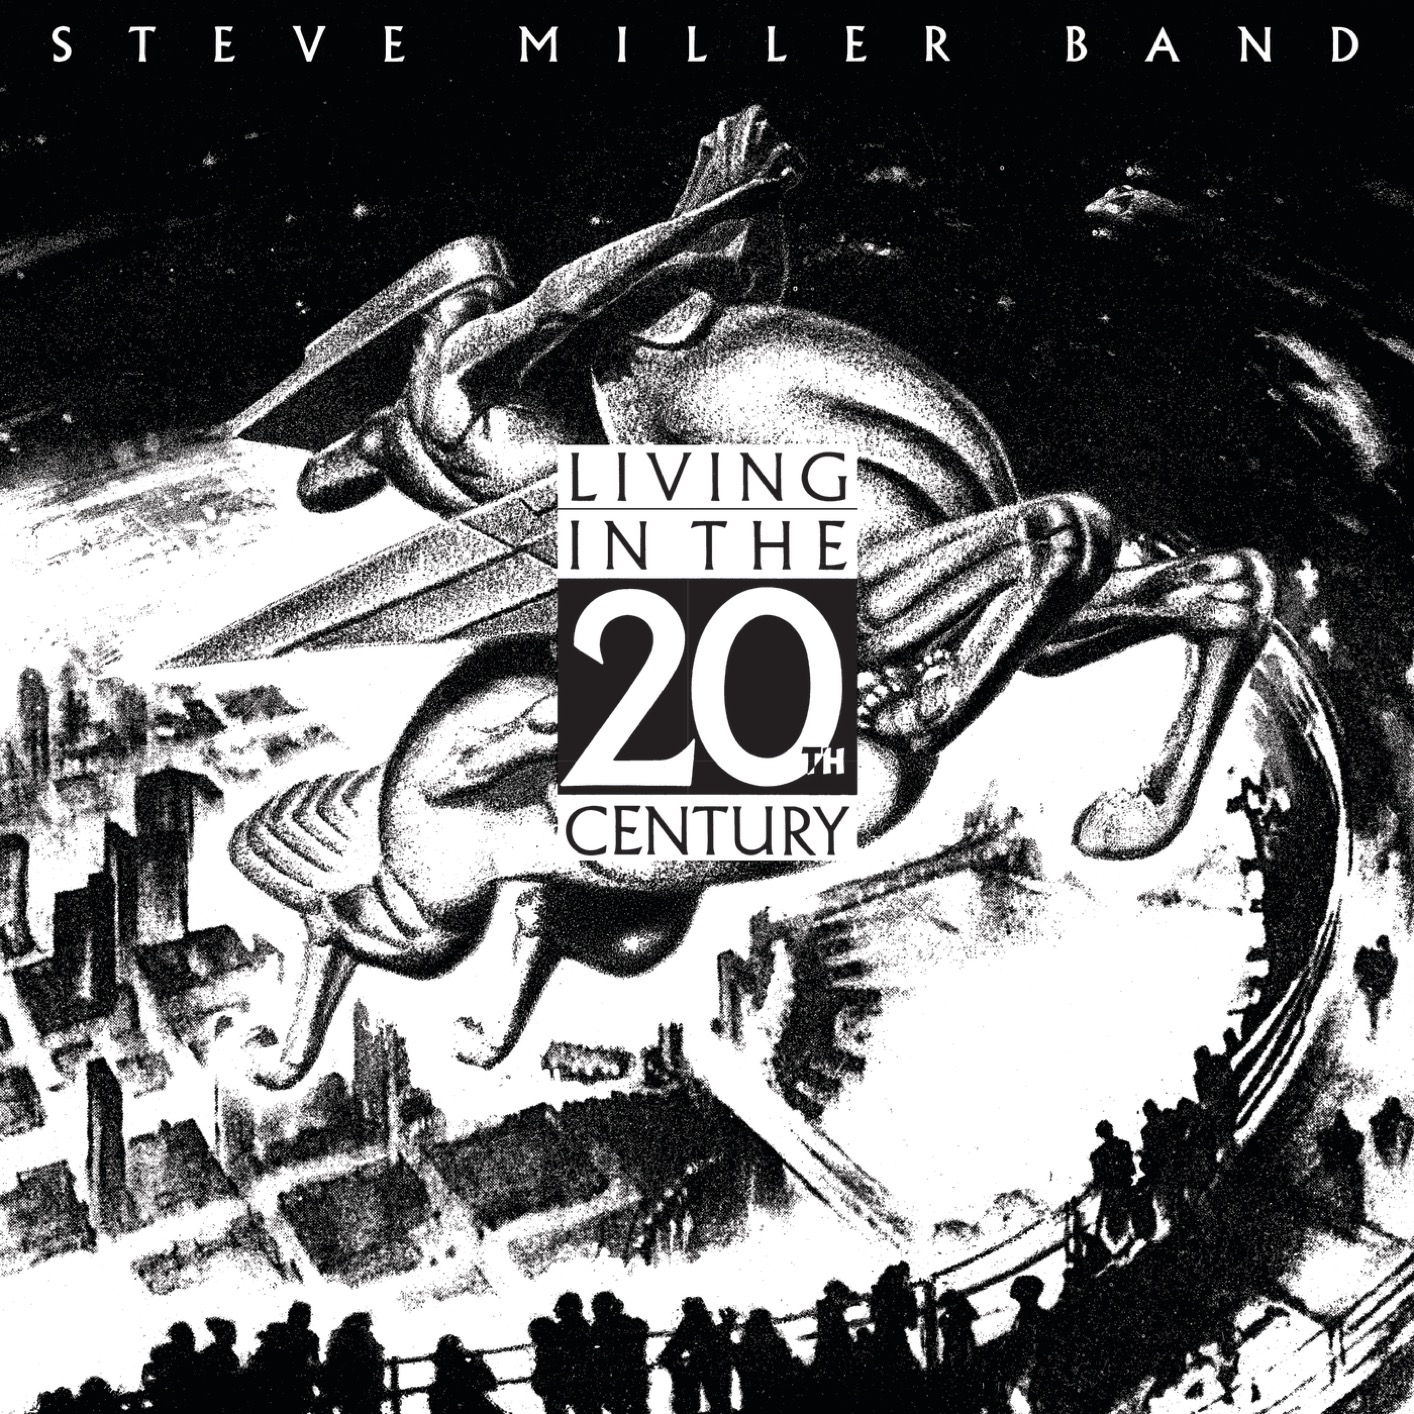 Steve Miller Band – Living In The 20th Century (Remastered) (1986/2019) [FLAC 24bit/96kHz]